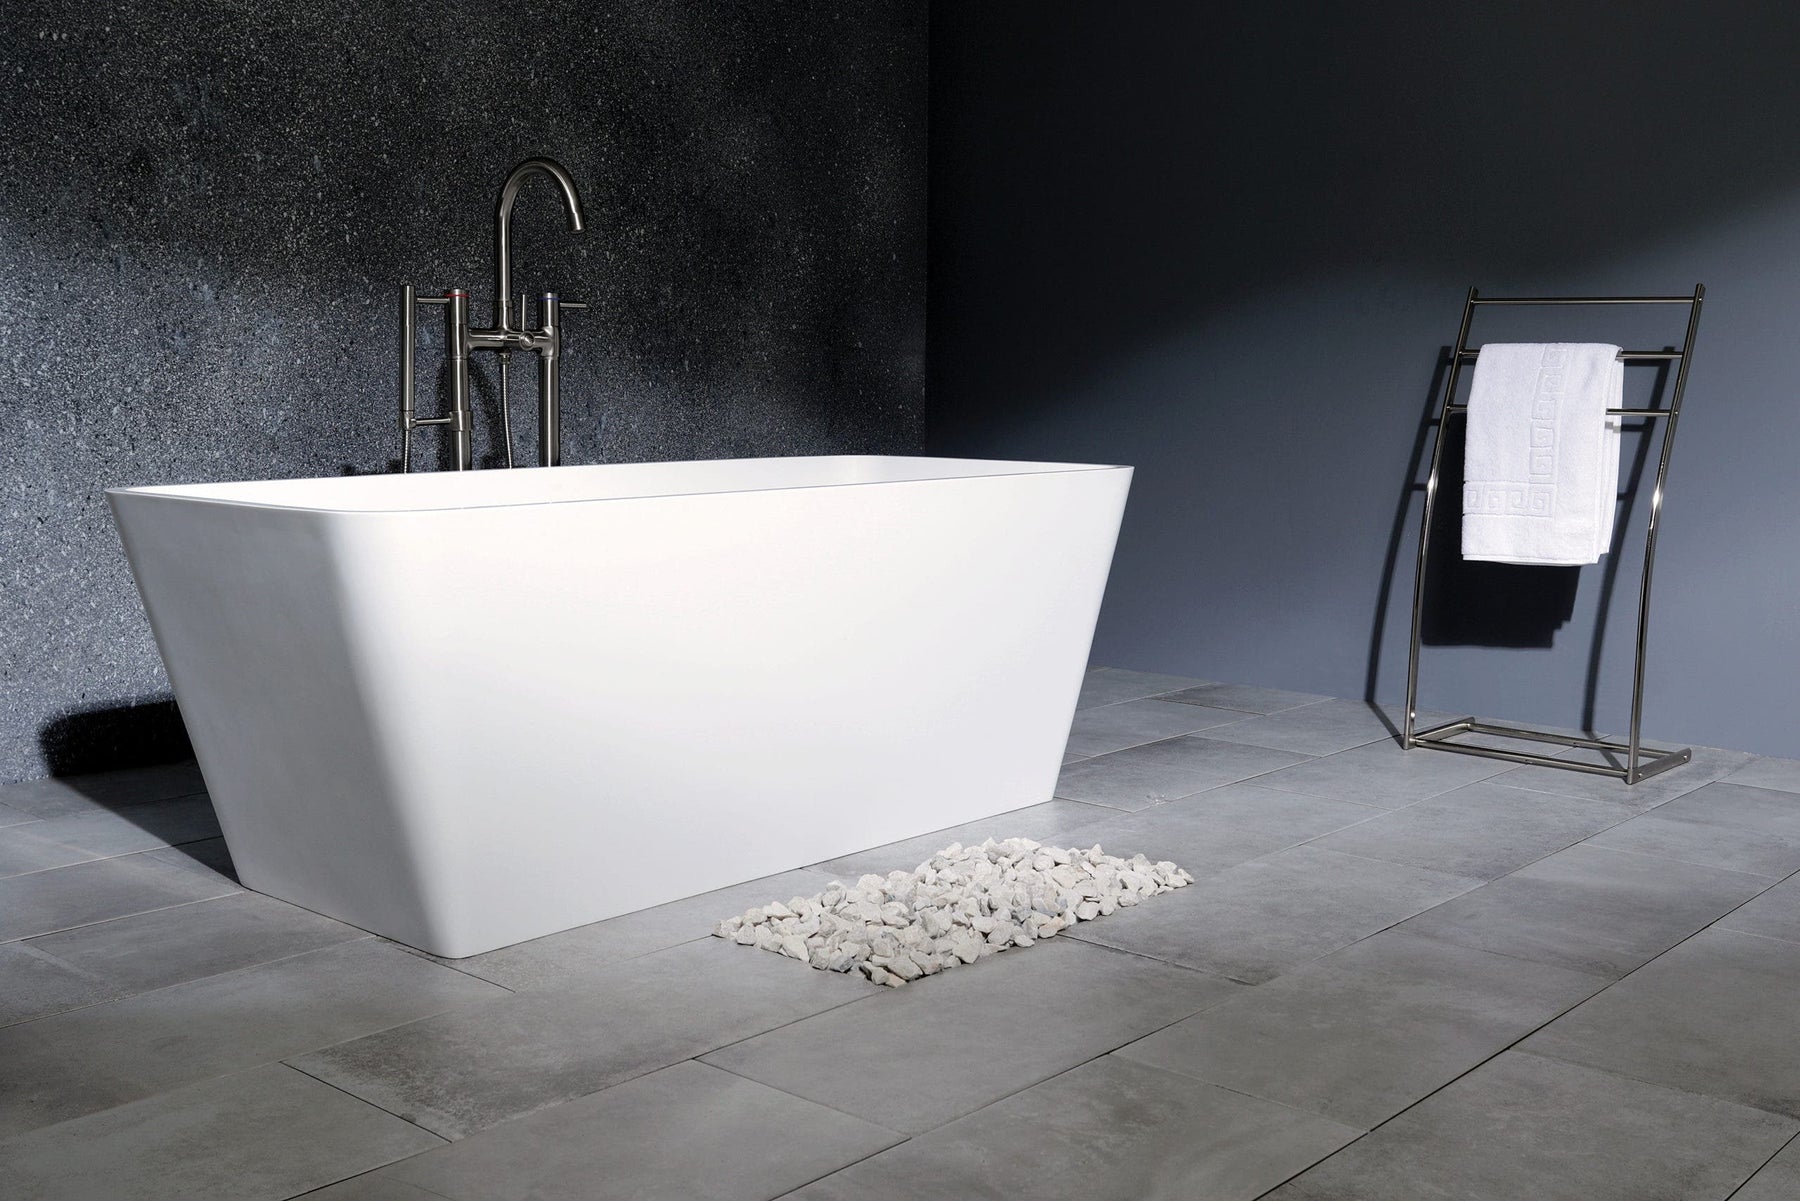 Bathtub Feature 5: Profile of the VRTSQ592722 solid surface bathtub